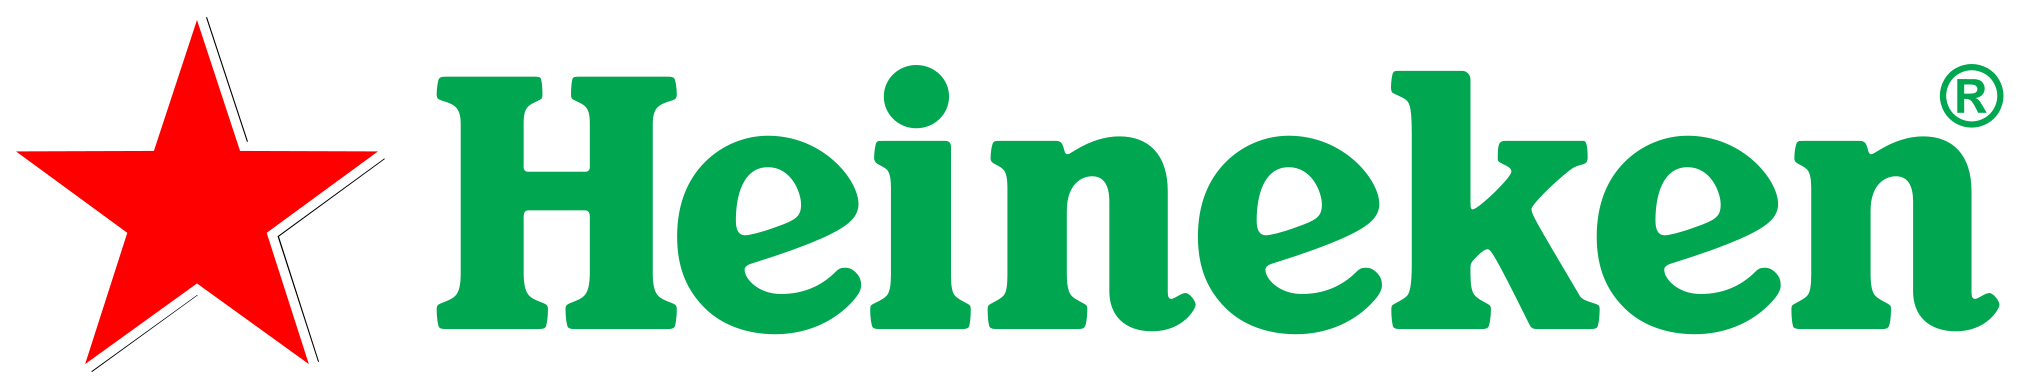 Heineken-logo -- 2272x1704.png